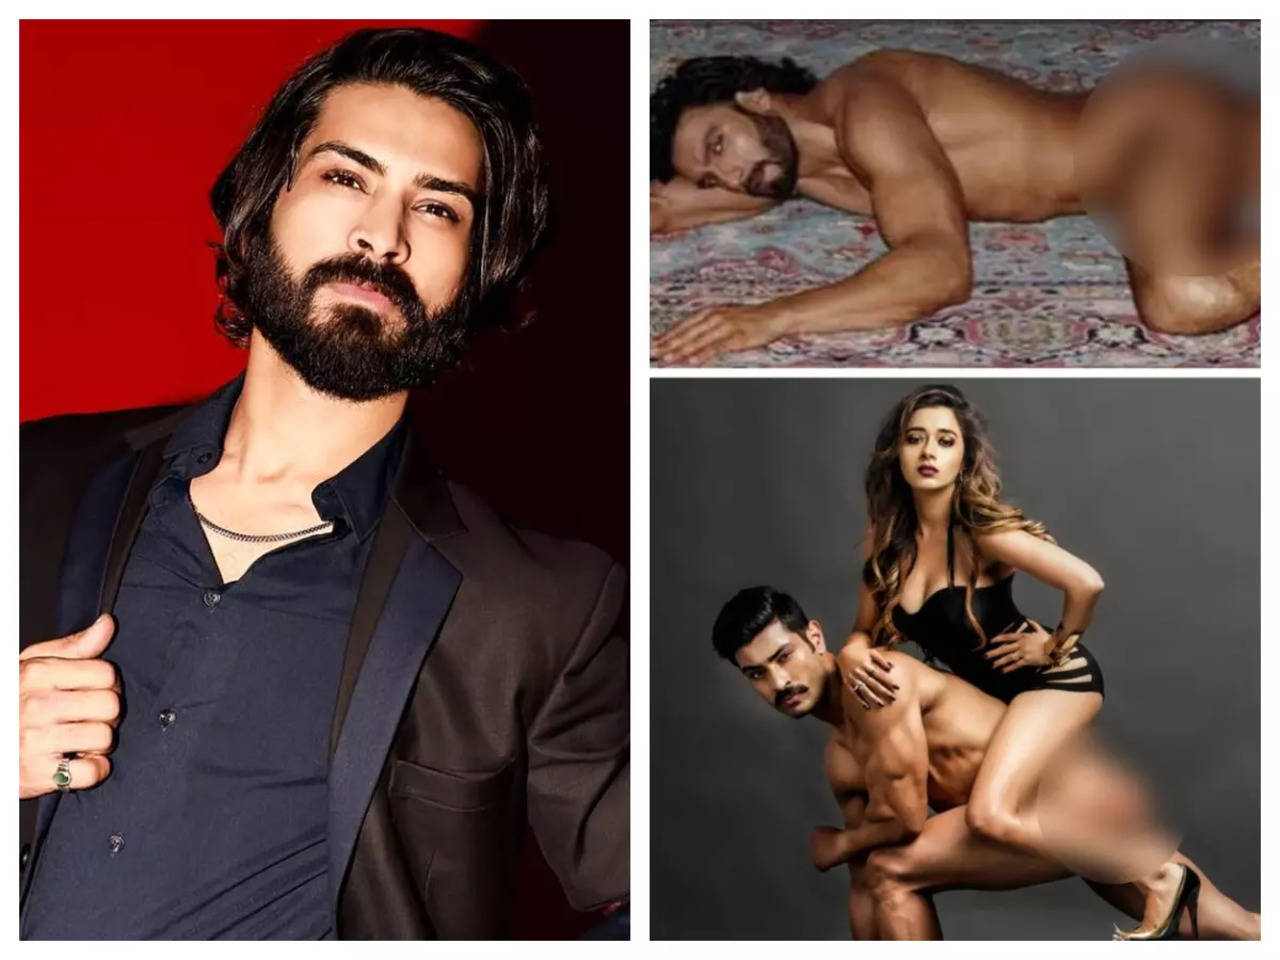 After Ranveer Singh's nude controversial photoshoot, Bhagya ...